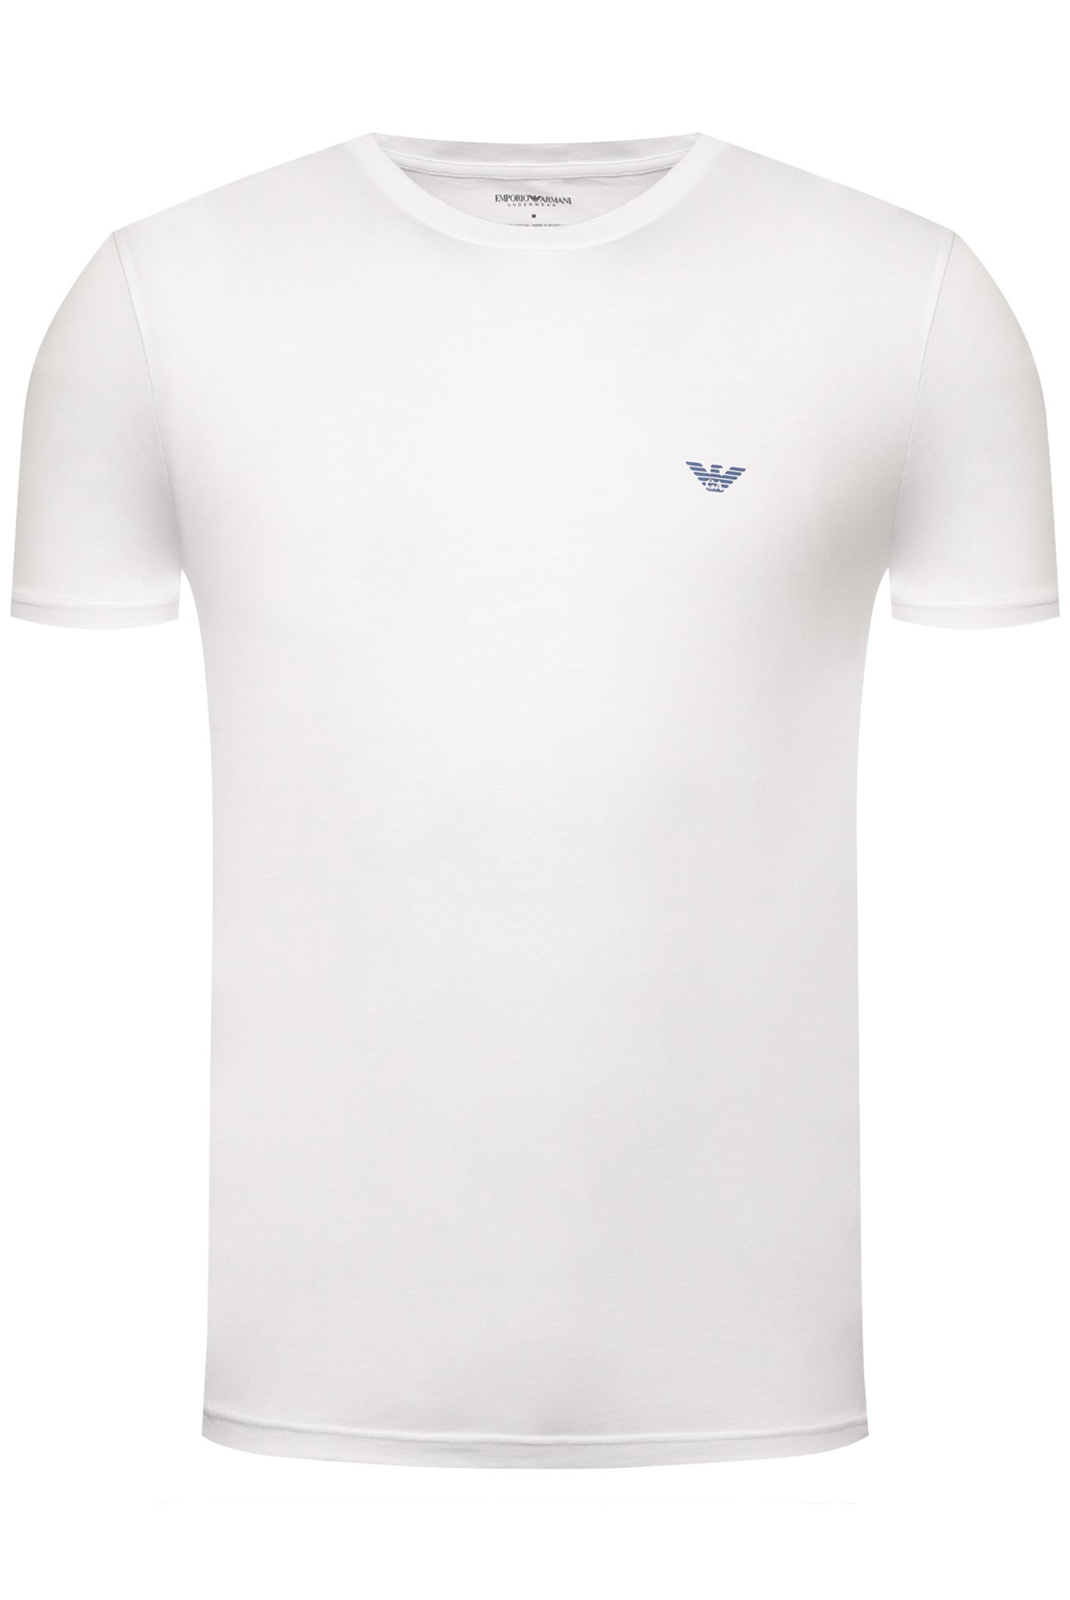 Tee-shirt blanc col arrondi Emporio Armani - 111019